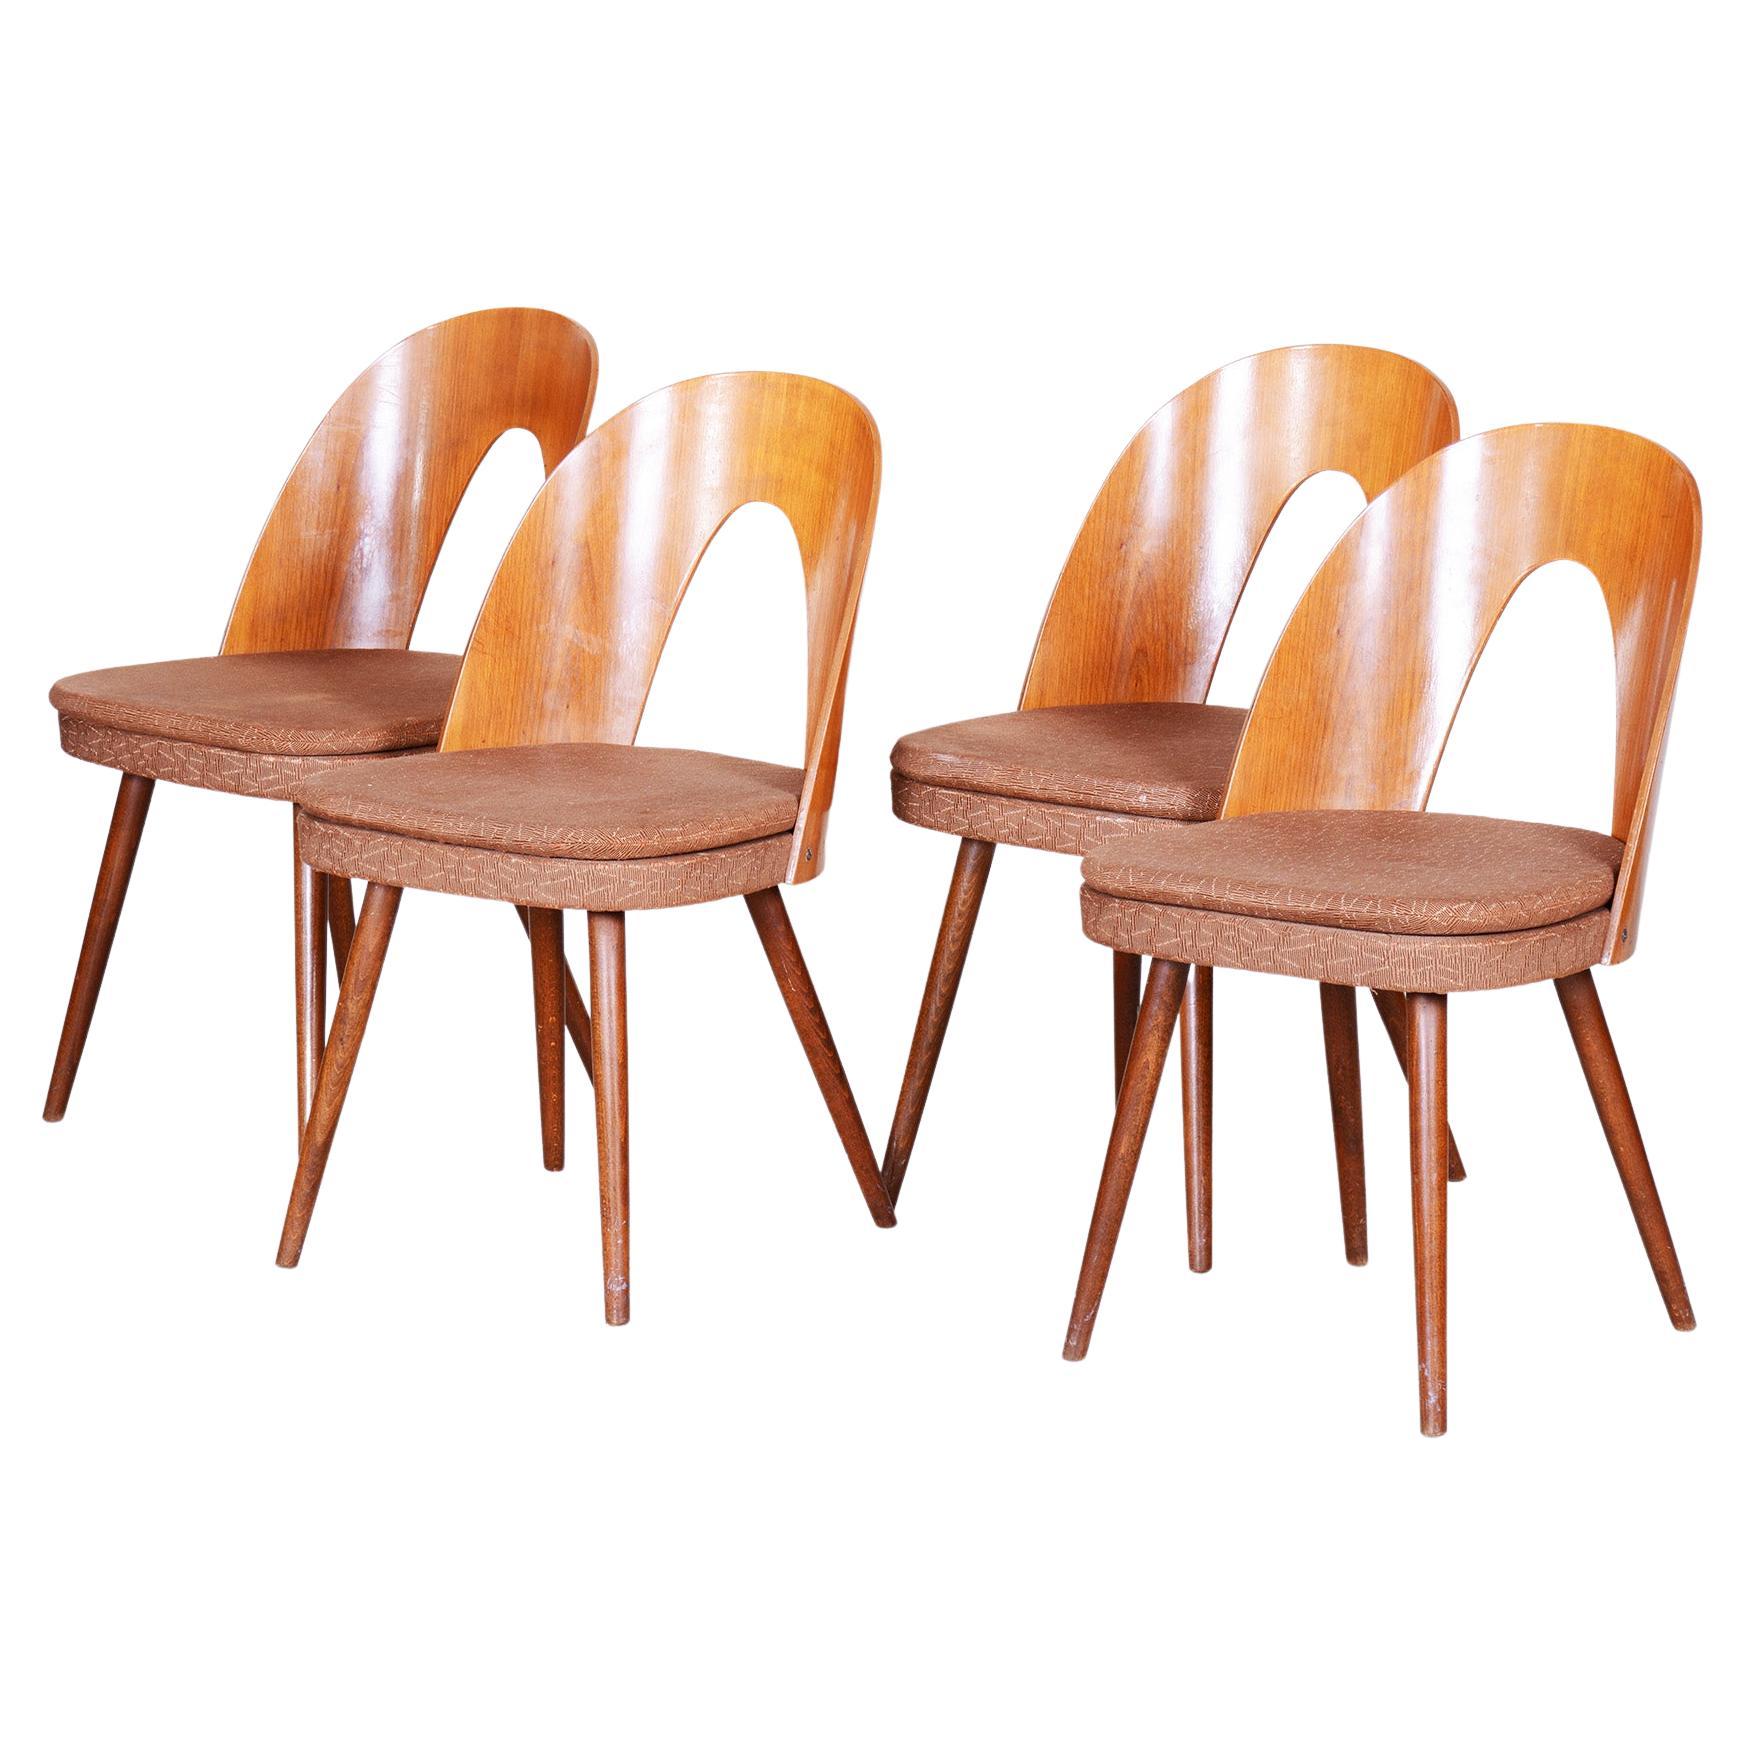 Set of Four Mid-Century Modern Chairs Made in 1950s Czechia by Antonín Šuman For Sale